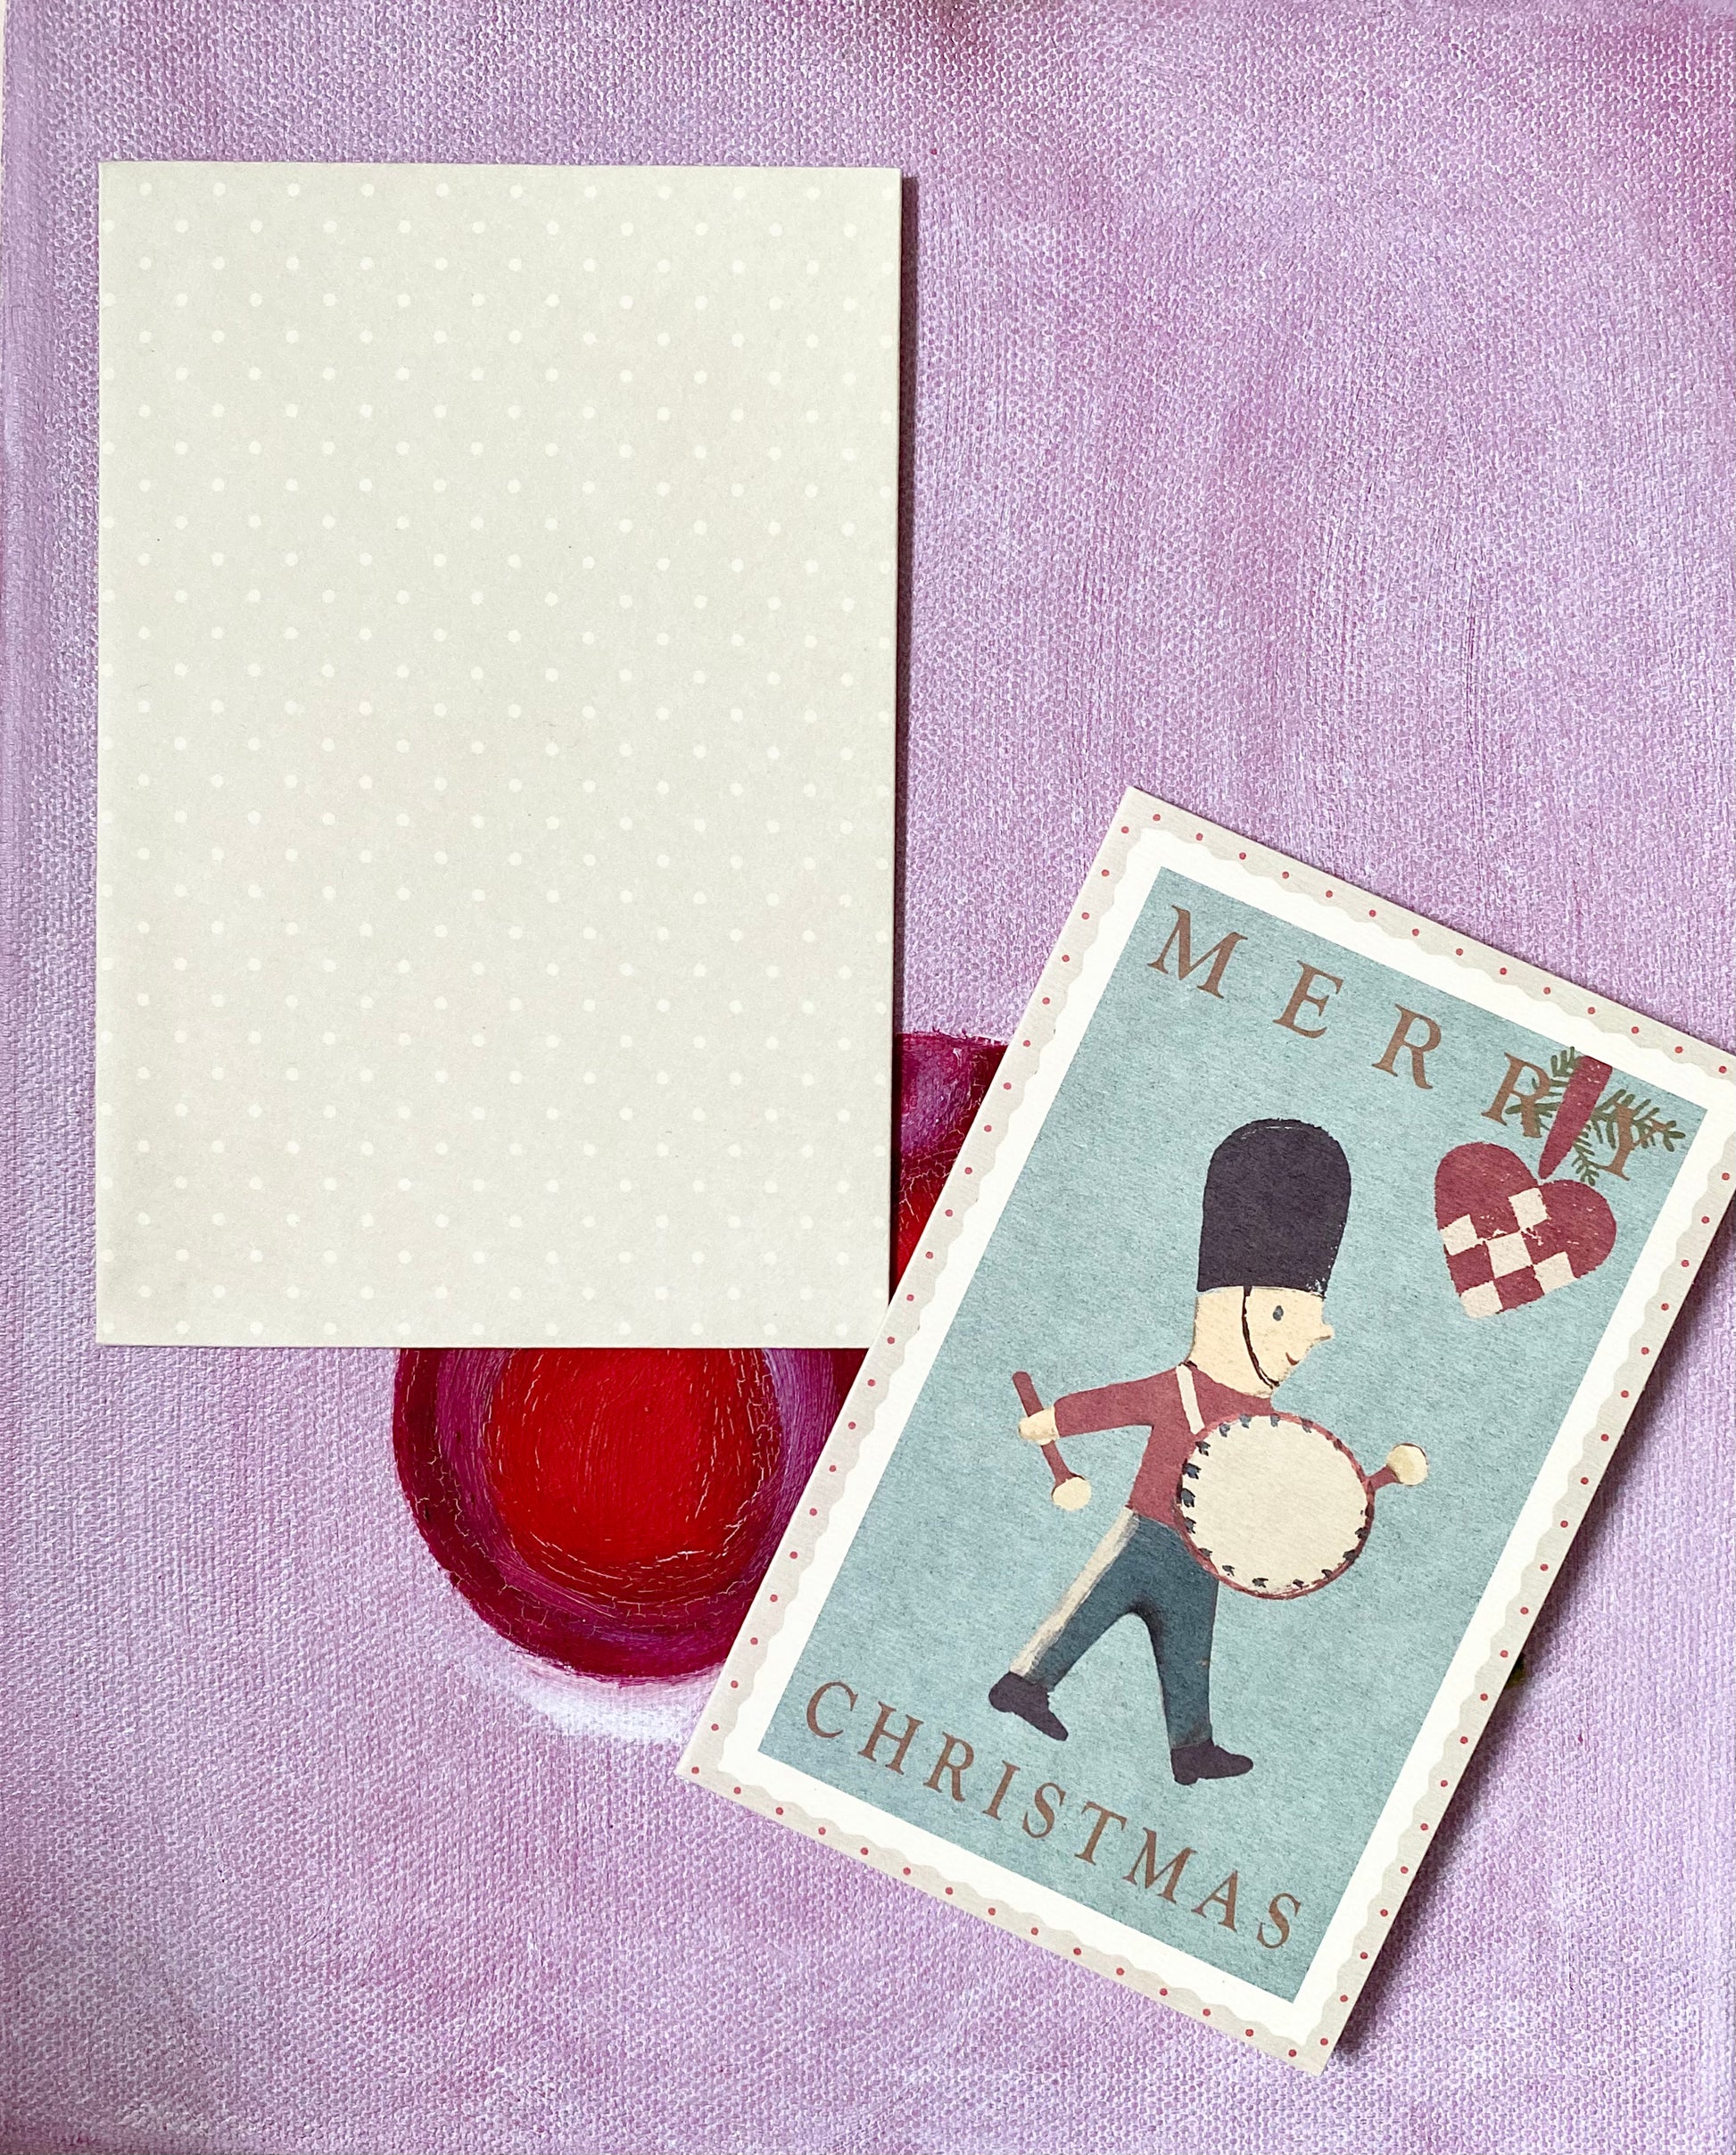 Small Christmas Card "Drum" - 2014